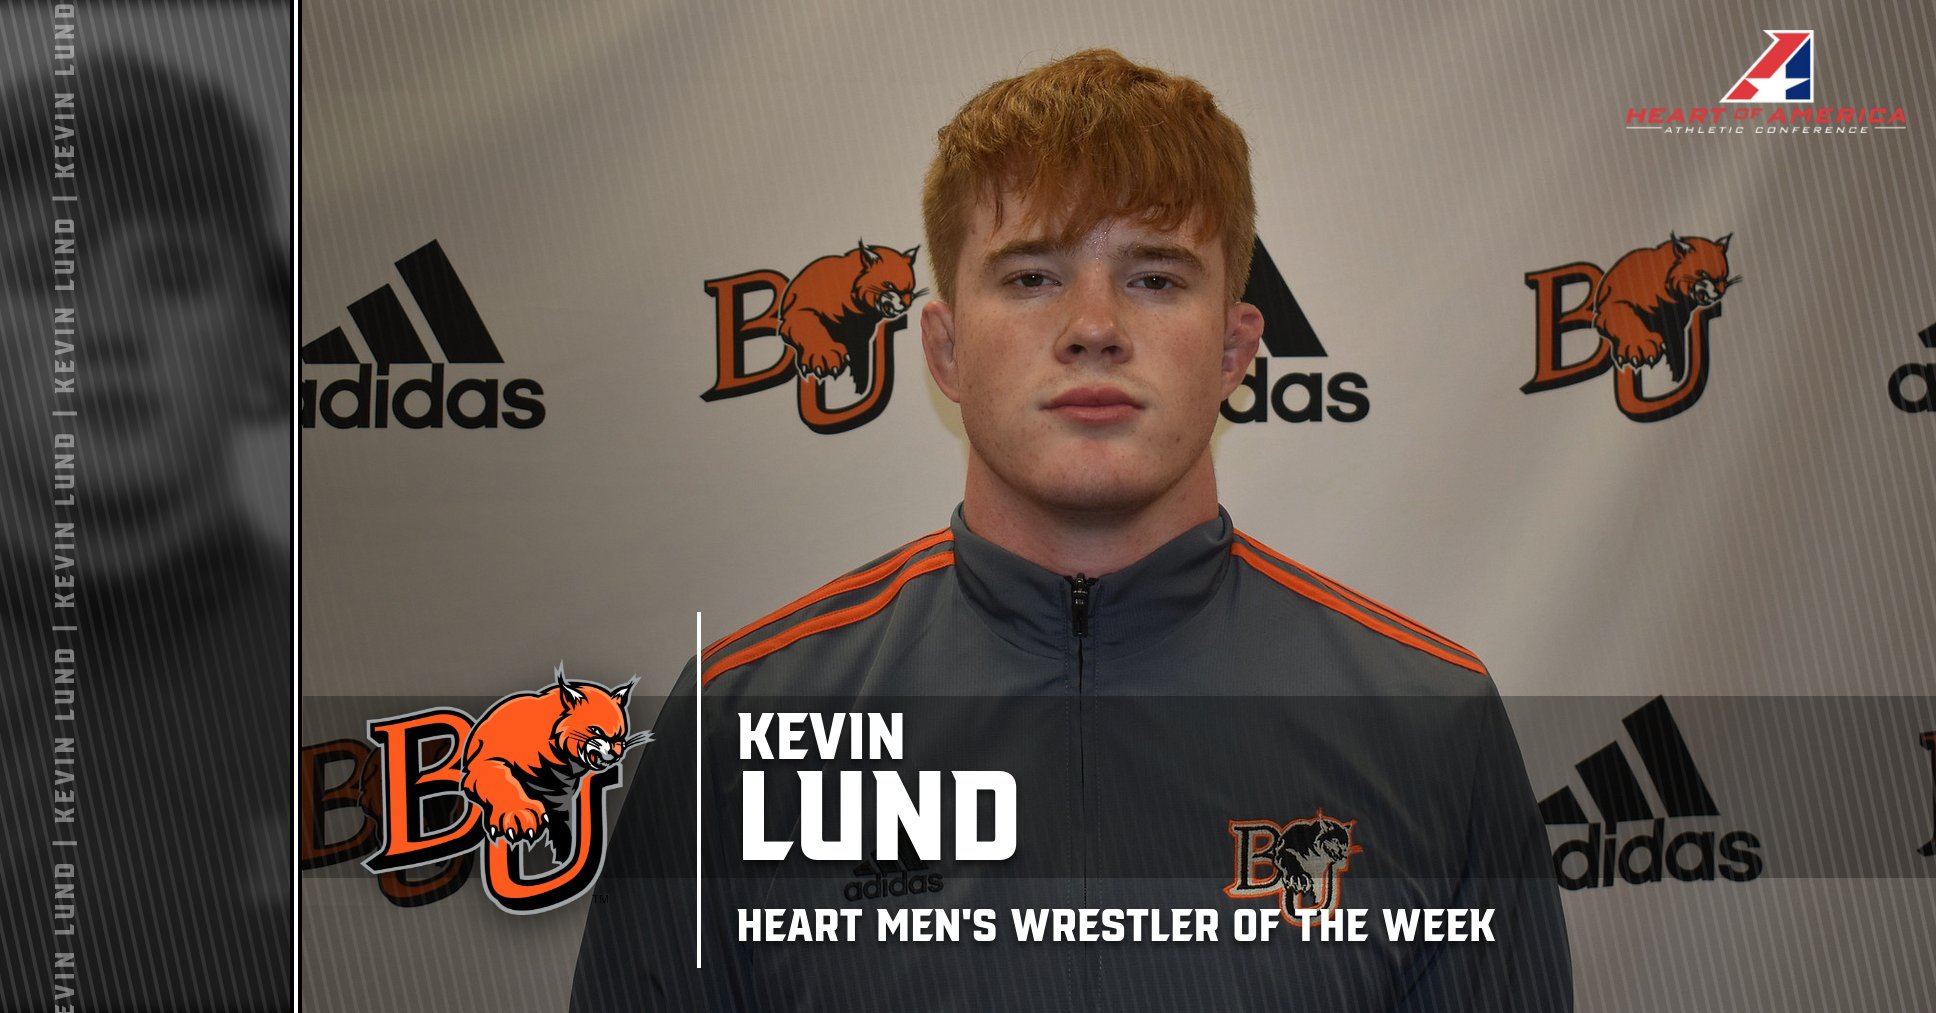 Lund Named Heart Men’s Wrestler of the Week